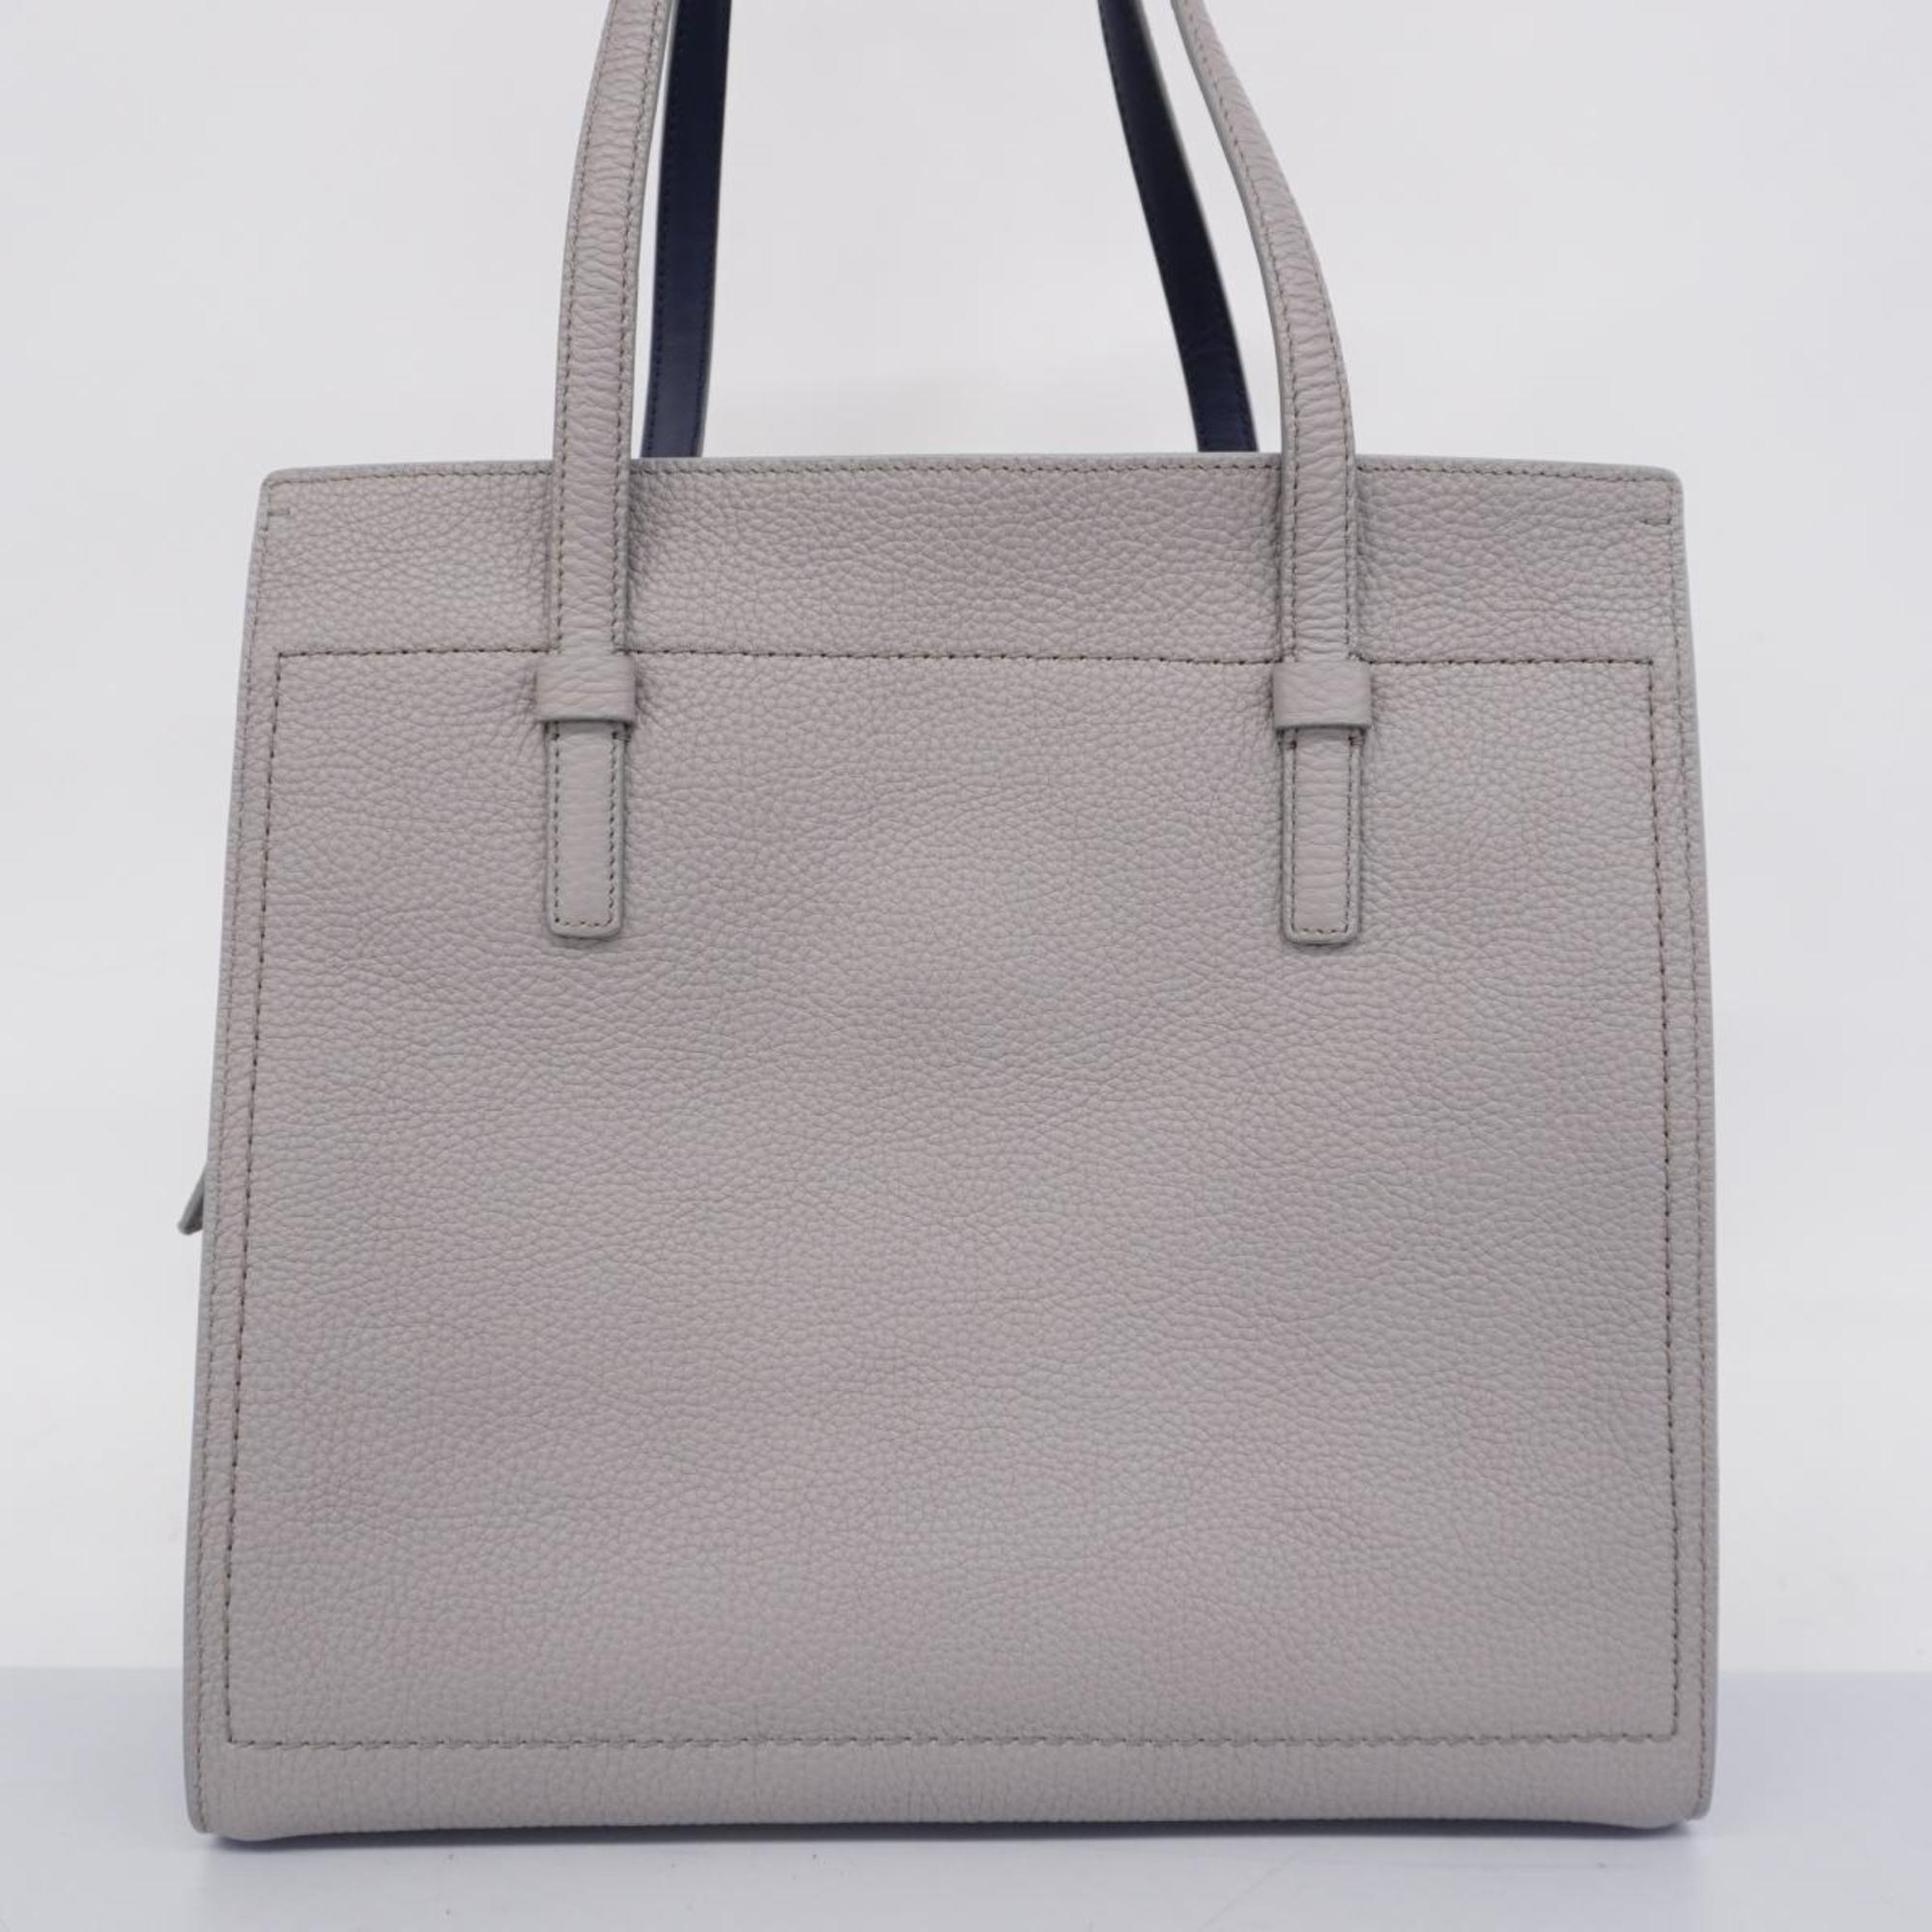 Salvatore Ferragamo Tote Bag Gancini Leather Grey Women's